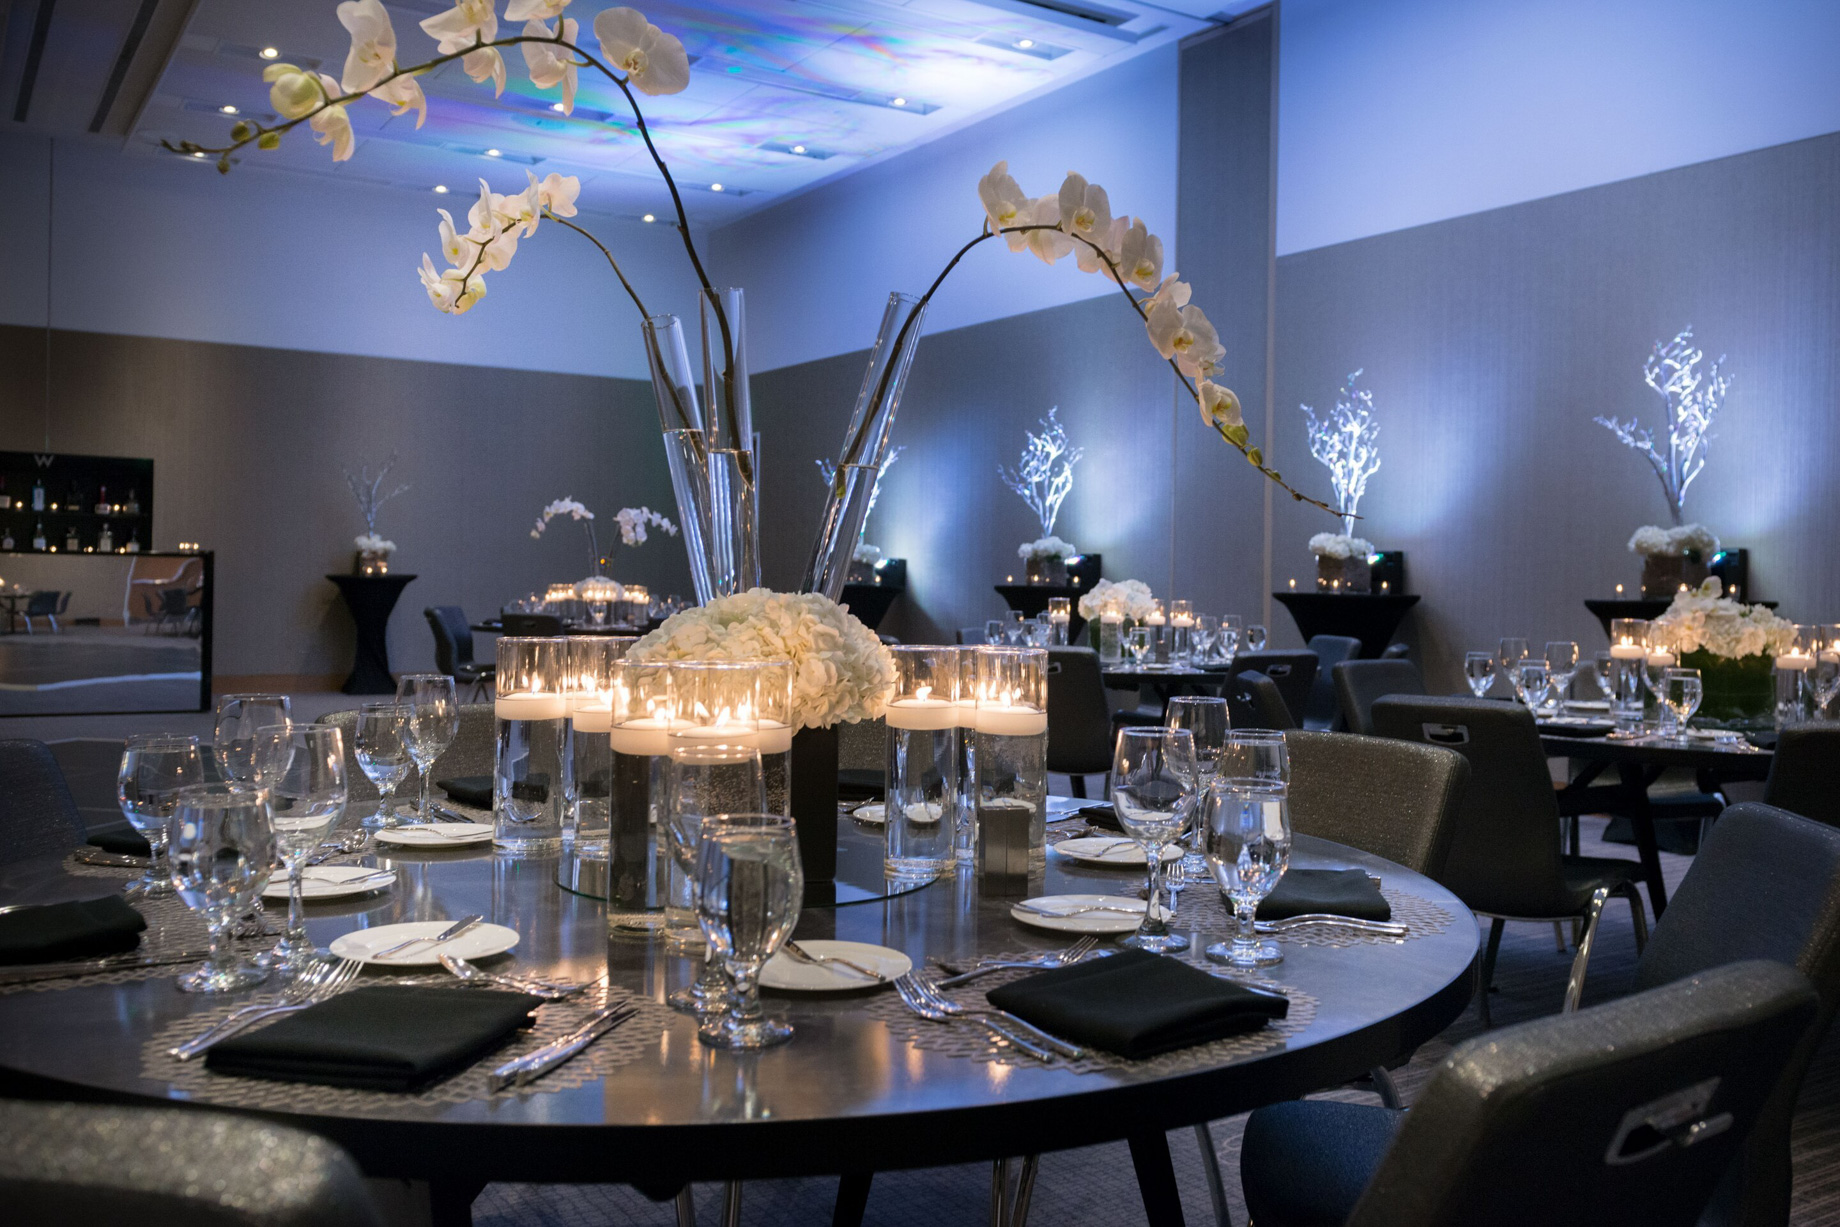 W Boston Hotel – Boston, MA, USA – Great Room Banquet Table Setup